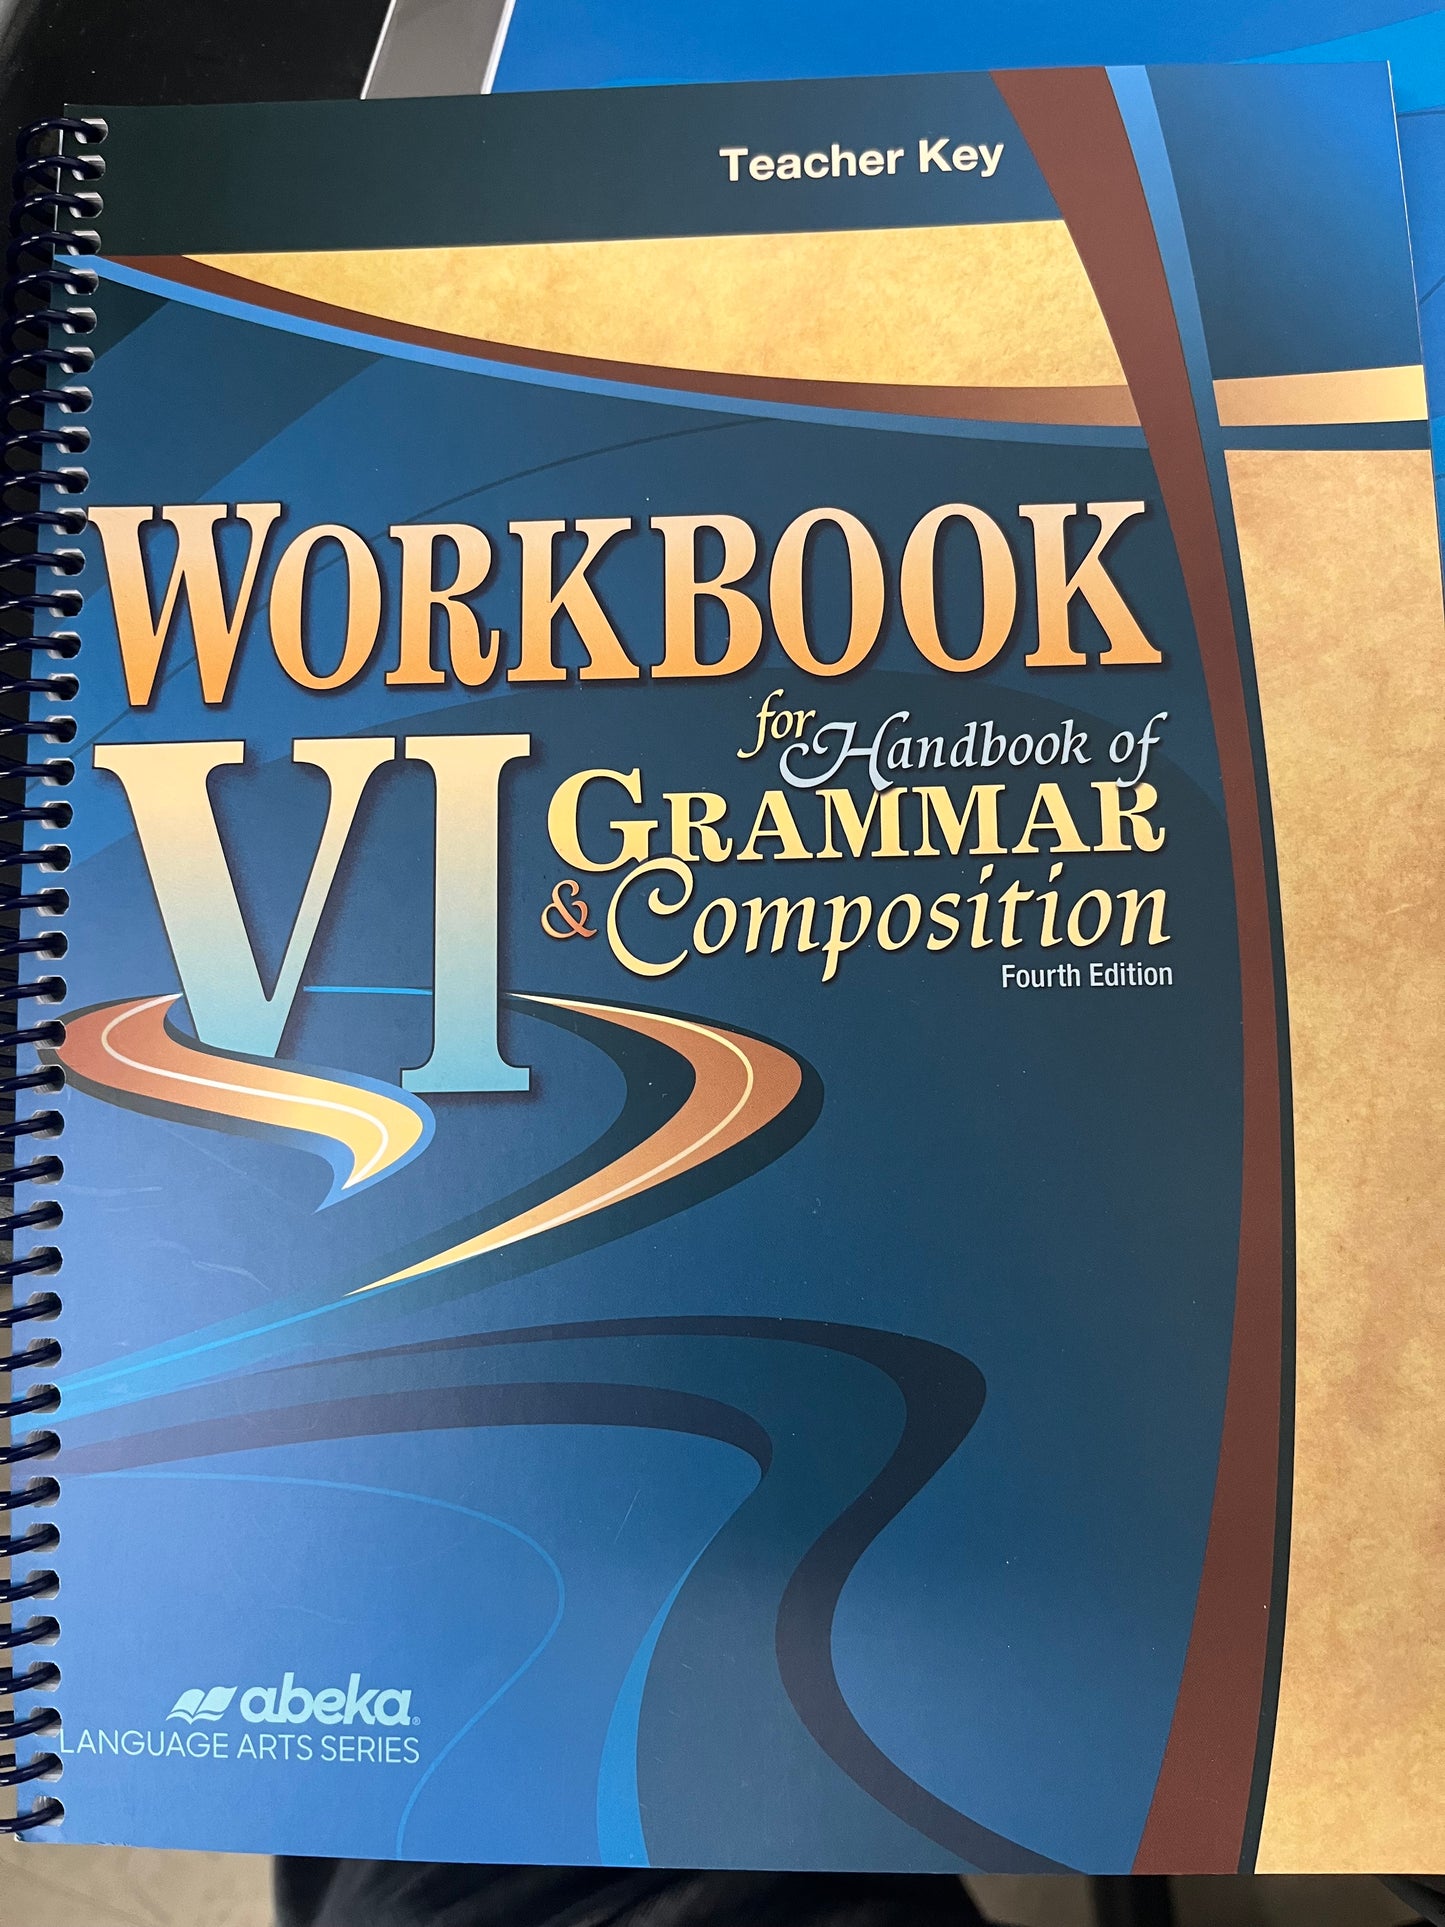 Workbook for Handbook of Grammar and Composition VI - Teacher Guide